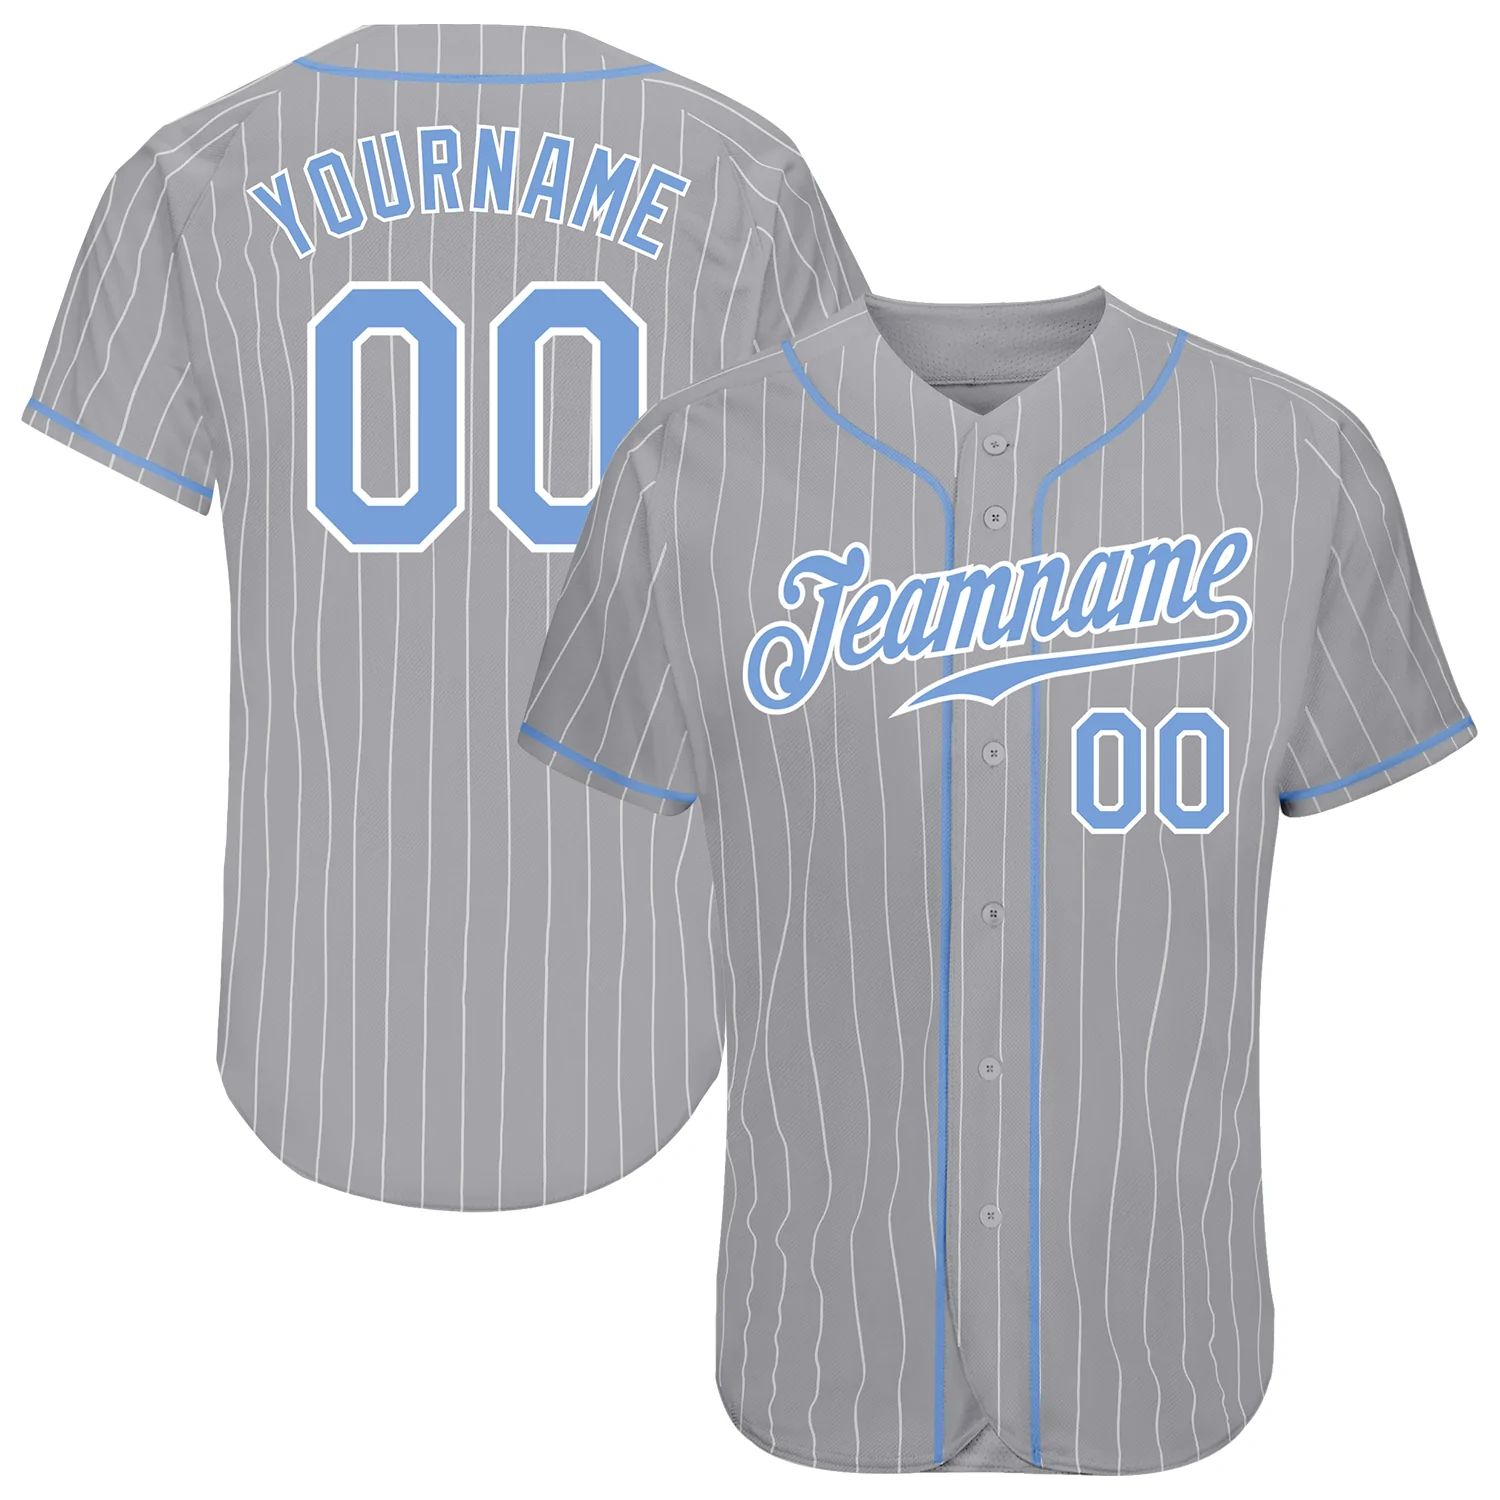 build-white-gray-pinstripe-baseball-light-blue-jersey-authentic-gray0302-online-1.jpg